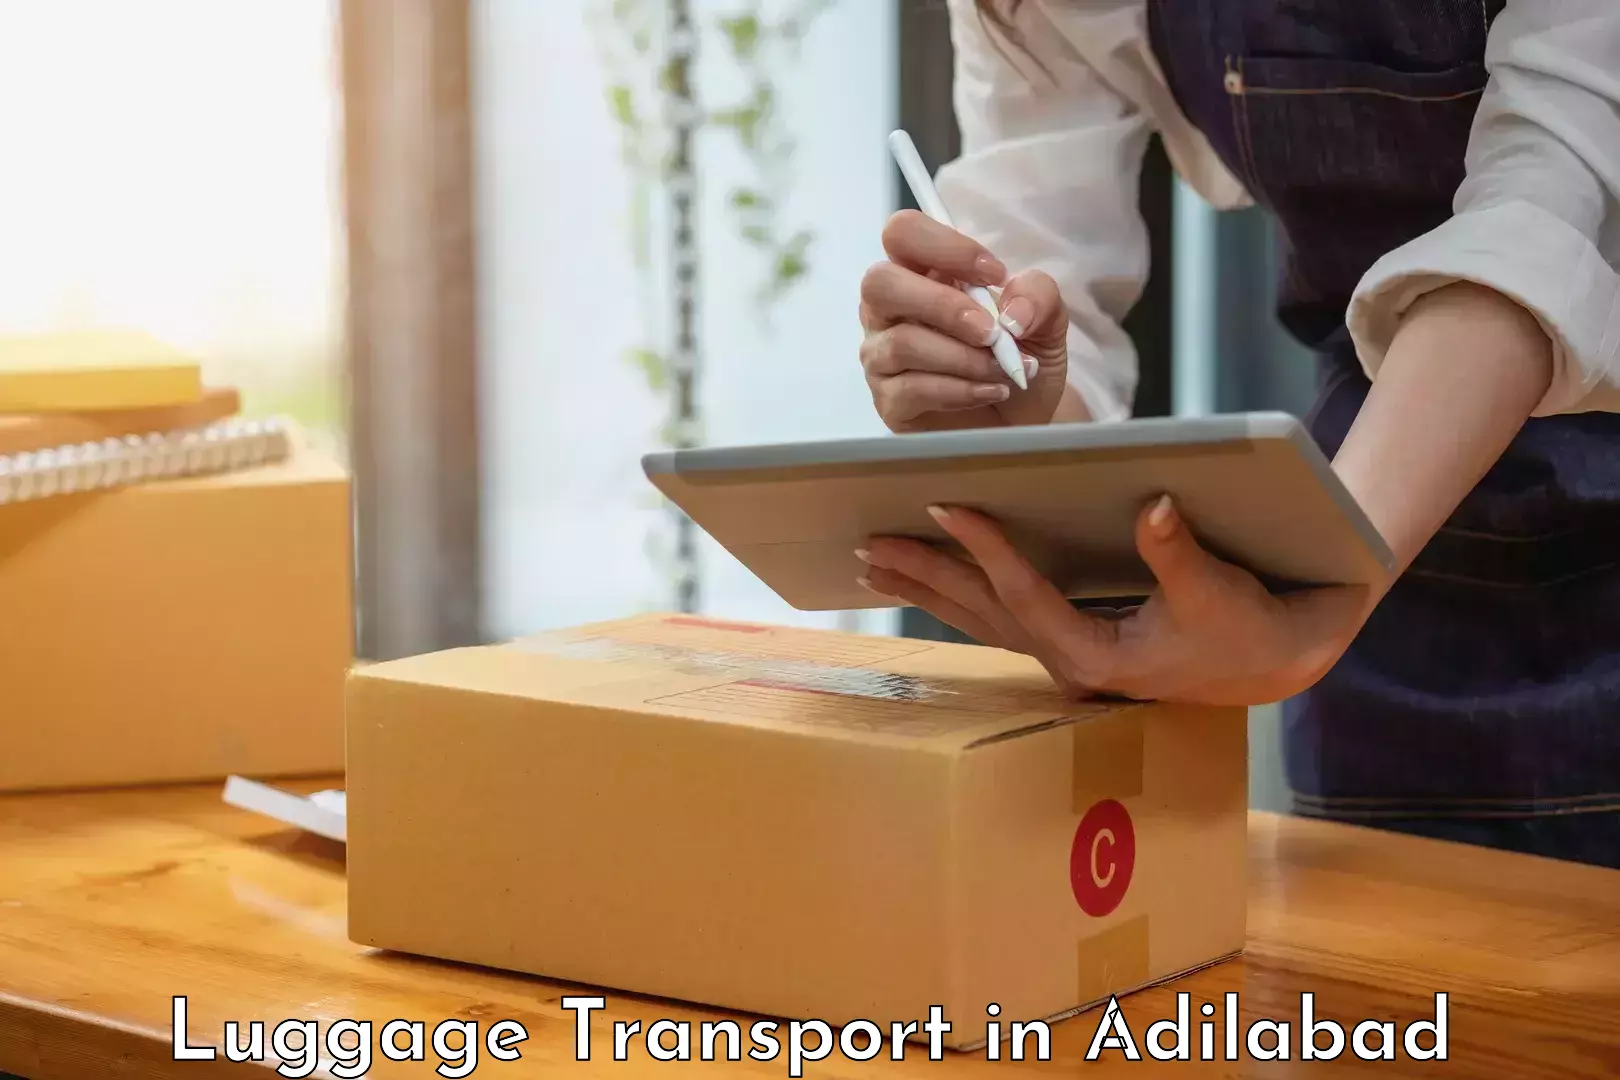 Multi-destination luggage transport in Adilabad